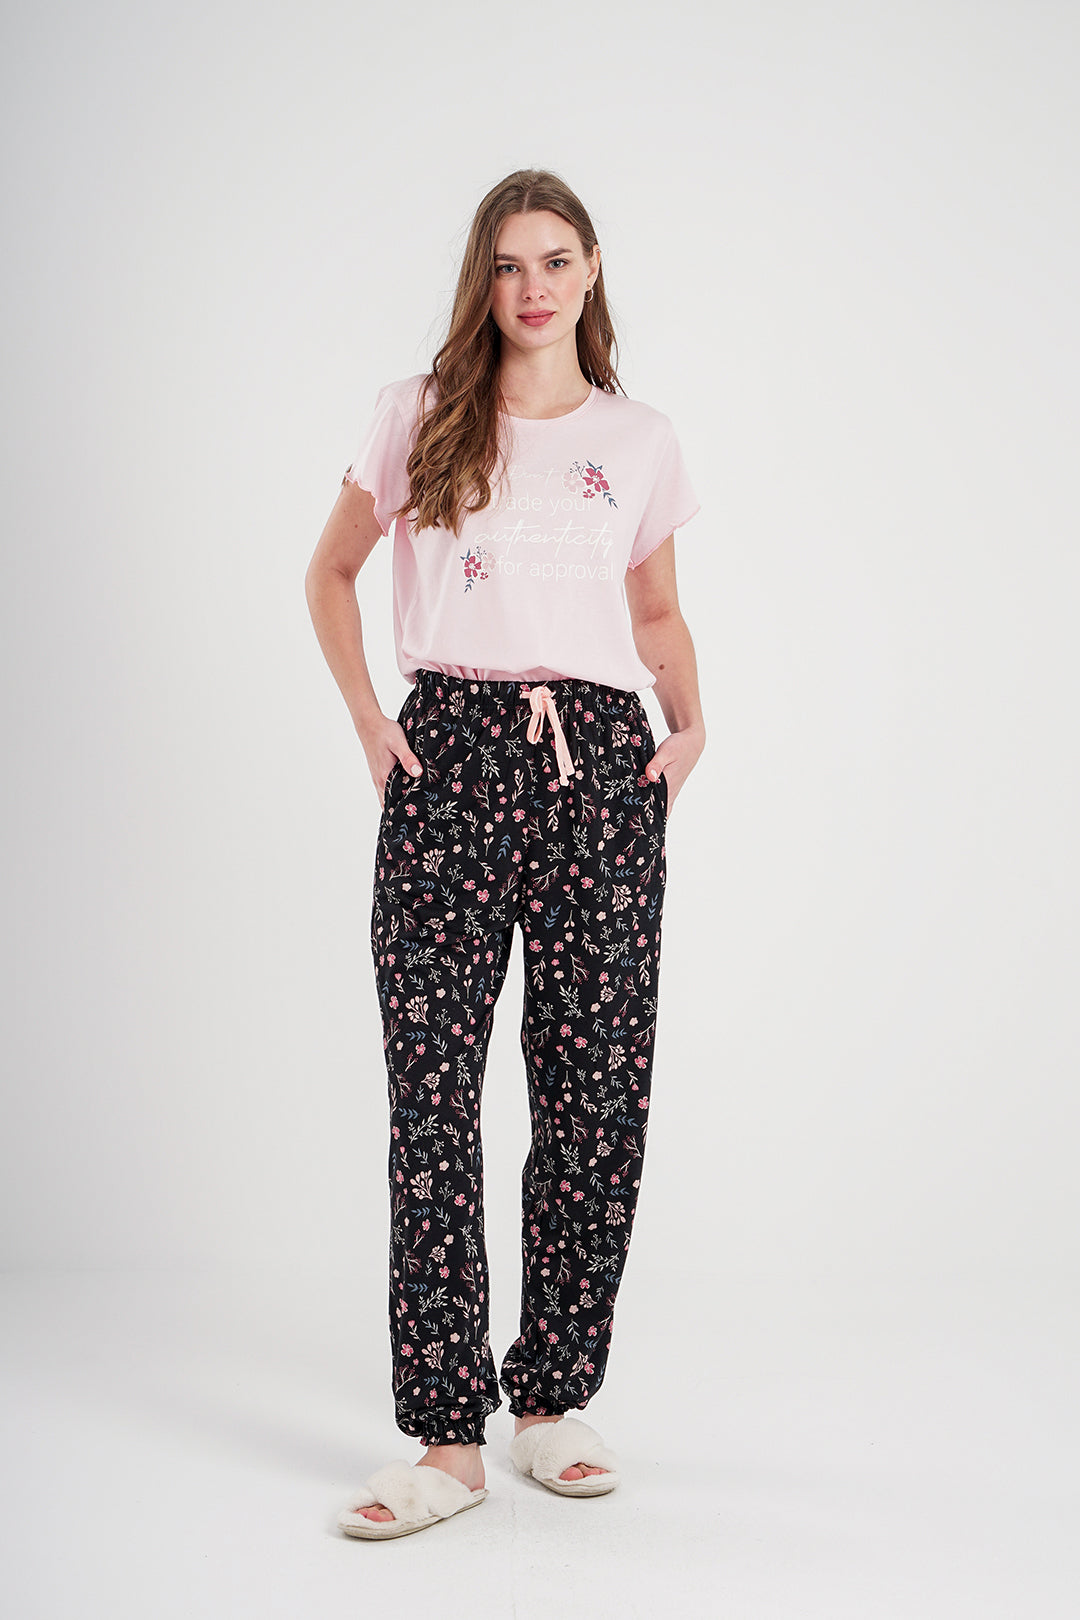 black floral women's pajamas with modal printed pants